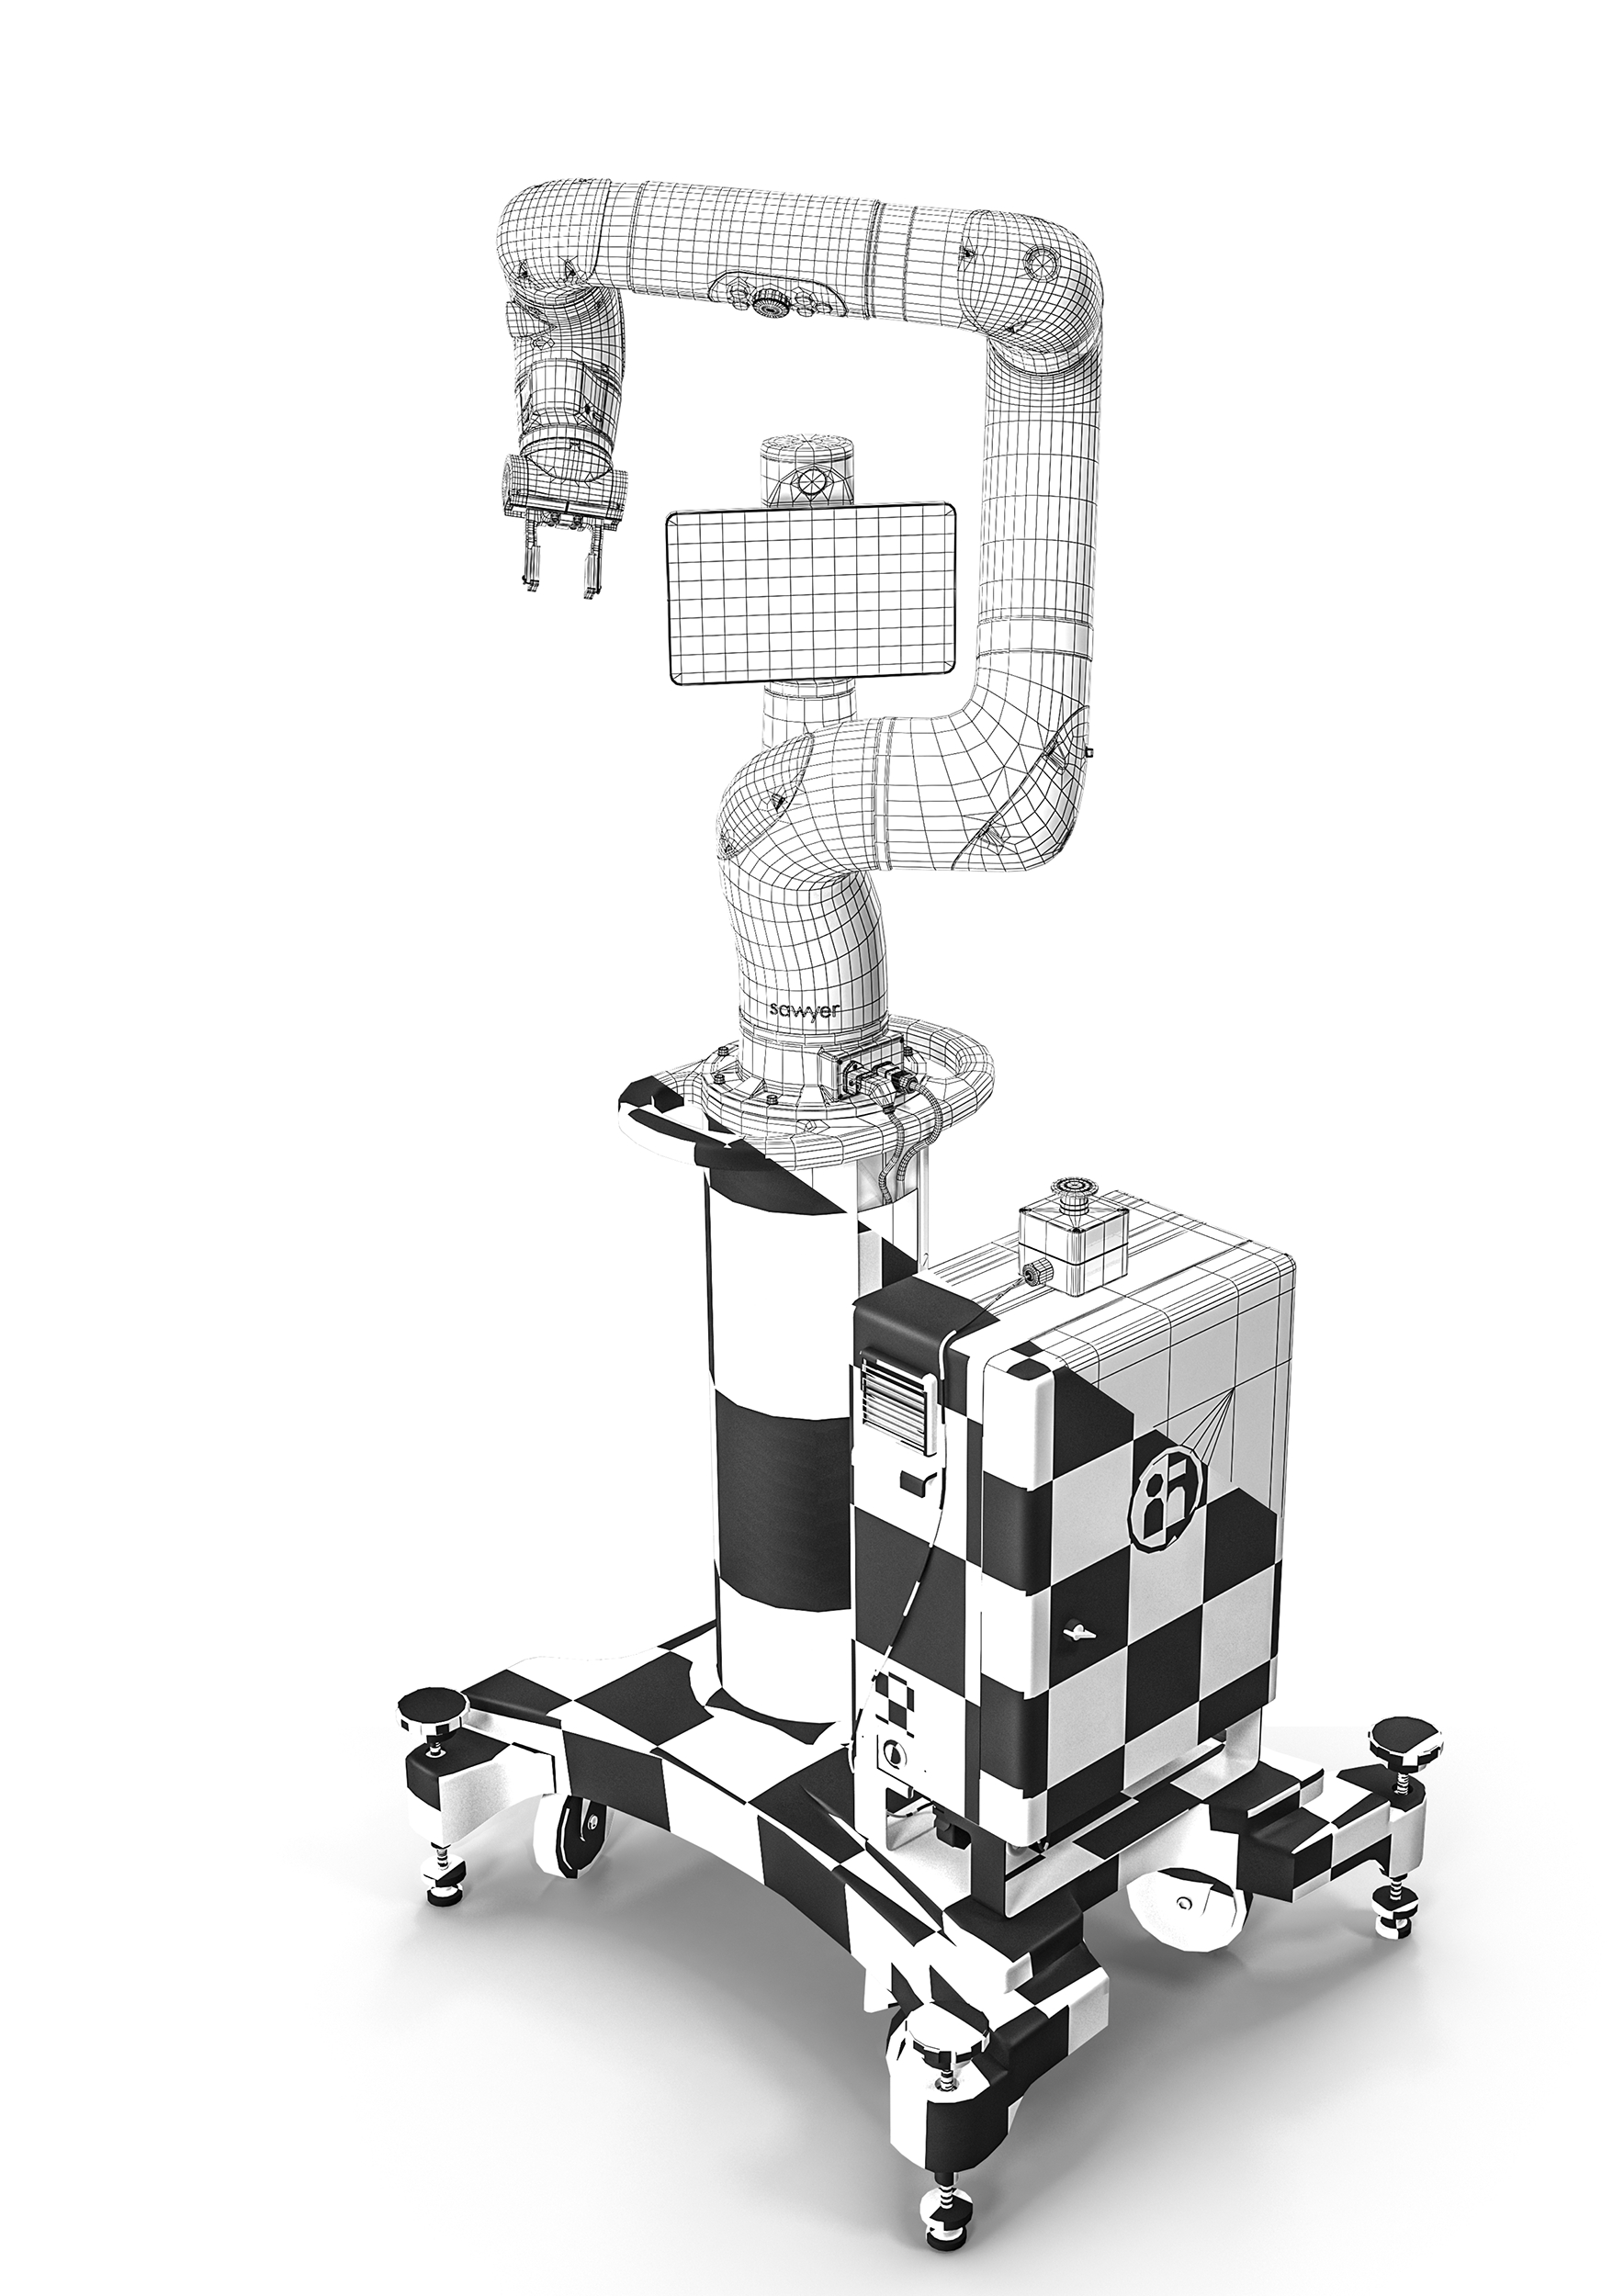 SAWYER industrial robot in Cinema 4d vray 5.0 image